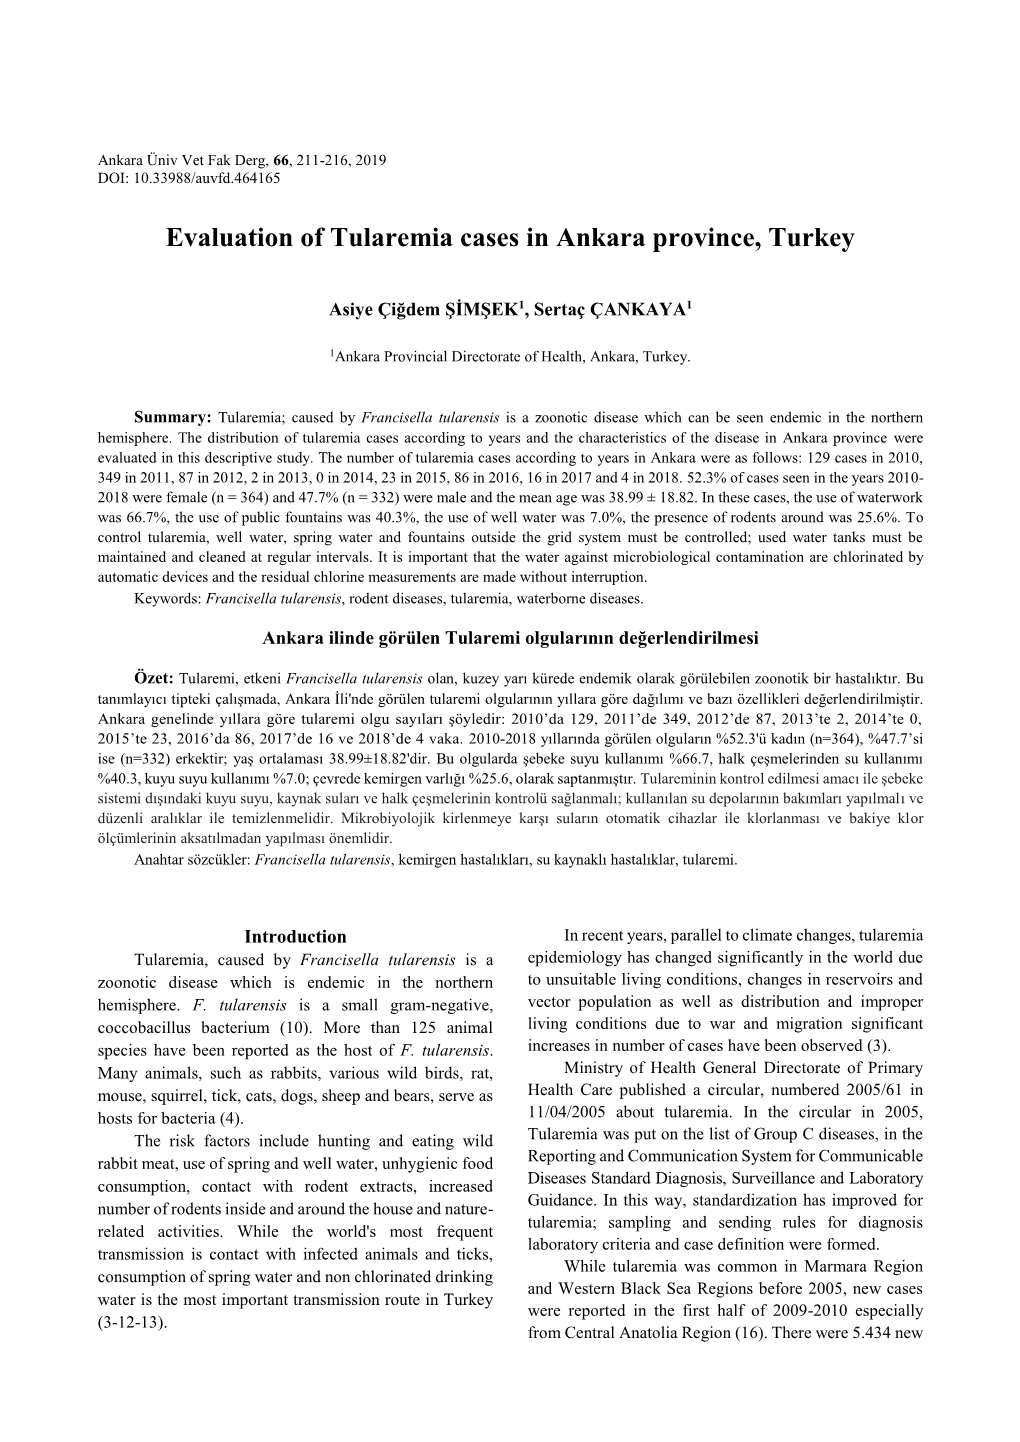 Evaluation of Tularemia Cases in Ankara Province, Turkey